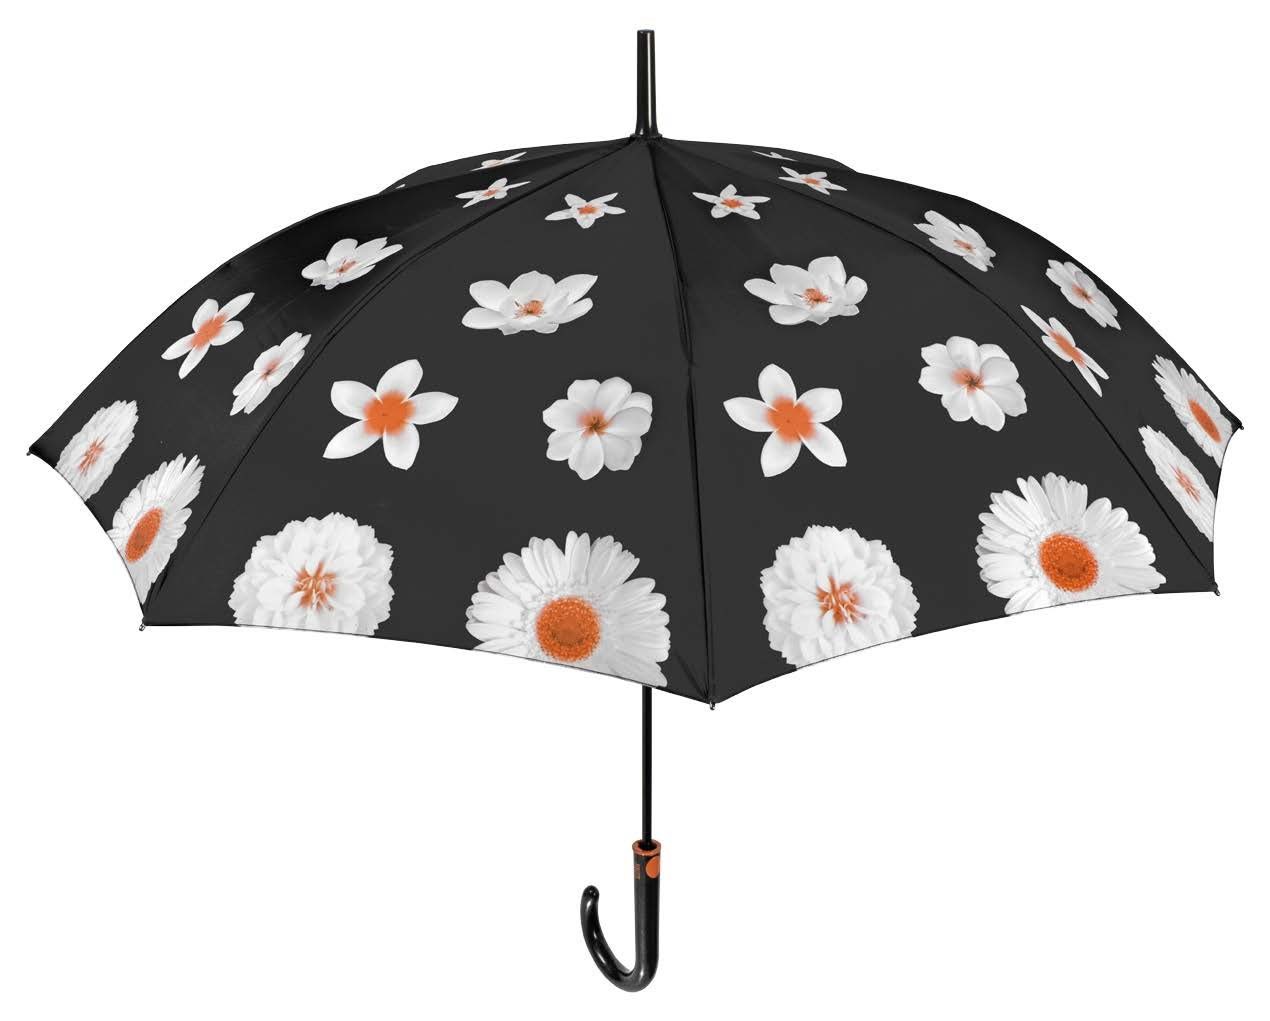 Espantar honor Anestésico Paraguas largo mujer flores blancas de Perletti - varios colores